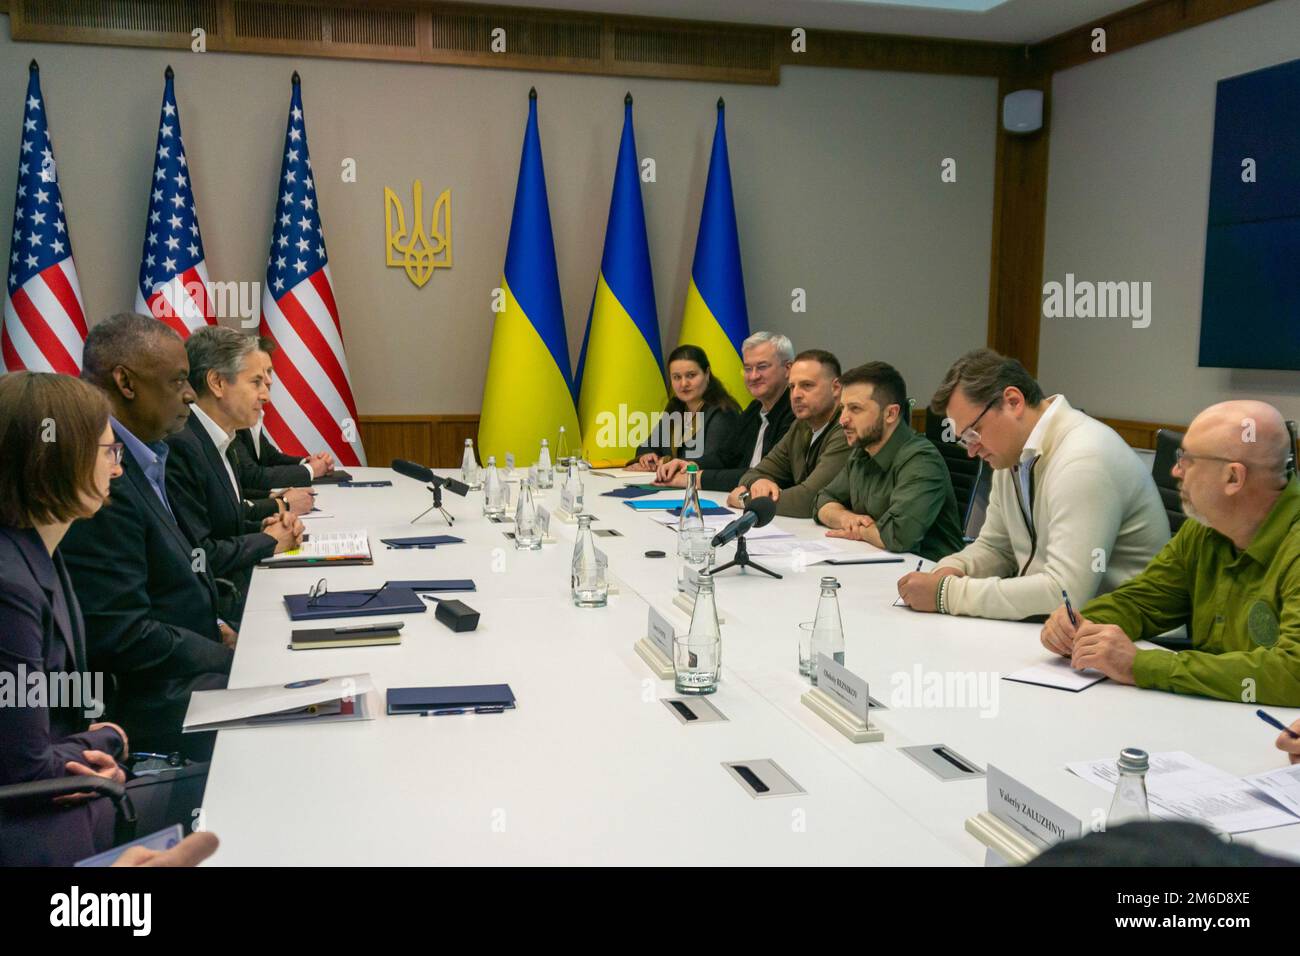 A delegation led by U.S. Secretary of Defense Lloyd Austin III and U.S. Secretary of State Antony Blinken traveled to Kyiv, Ukraine, on April 24, 2022, to meet with Ukrainian President Volodymyr Zelenskyy. (DoD photo) Stock Photo